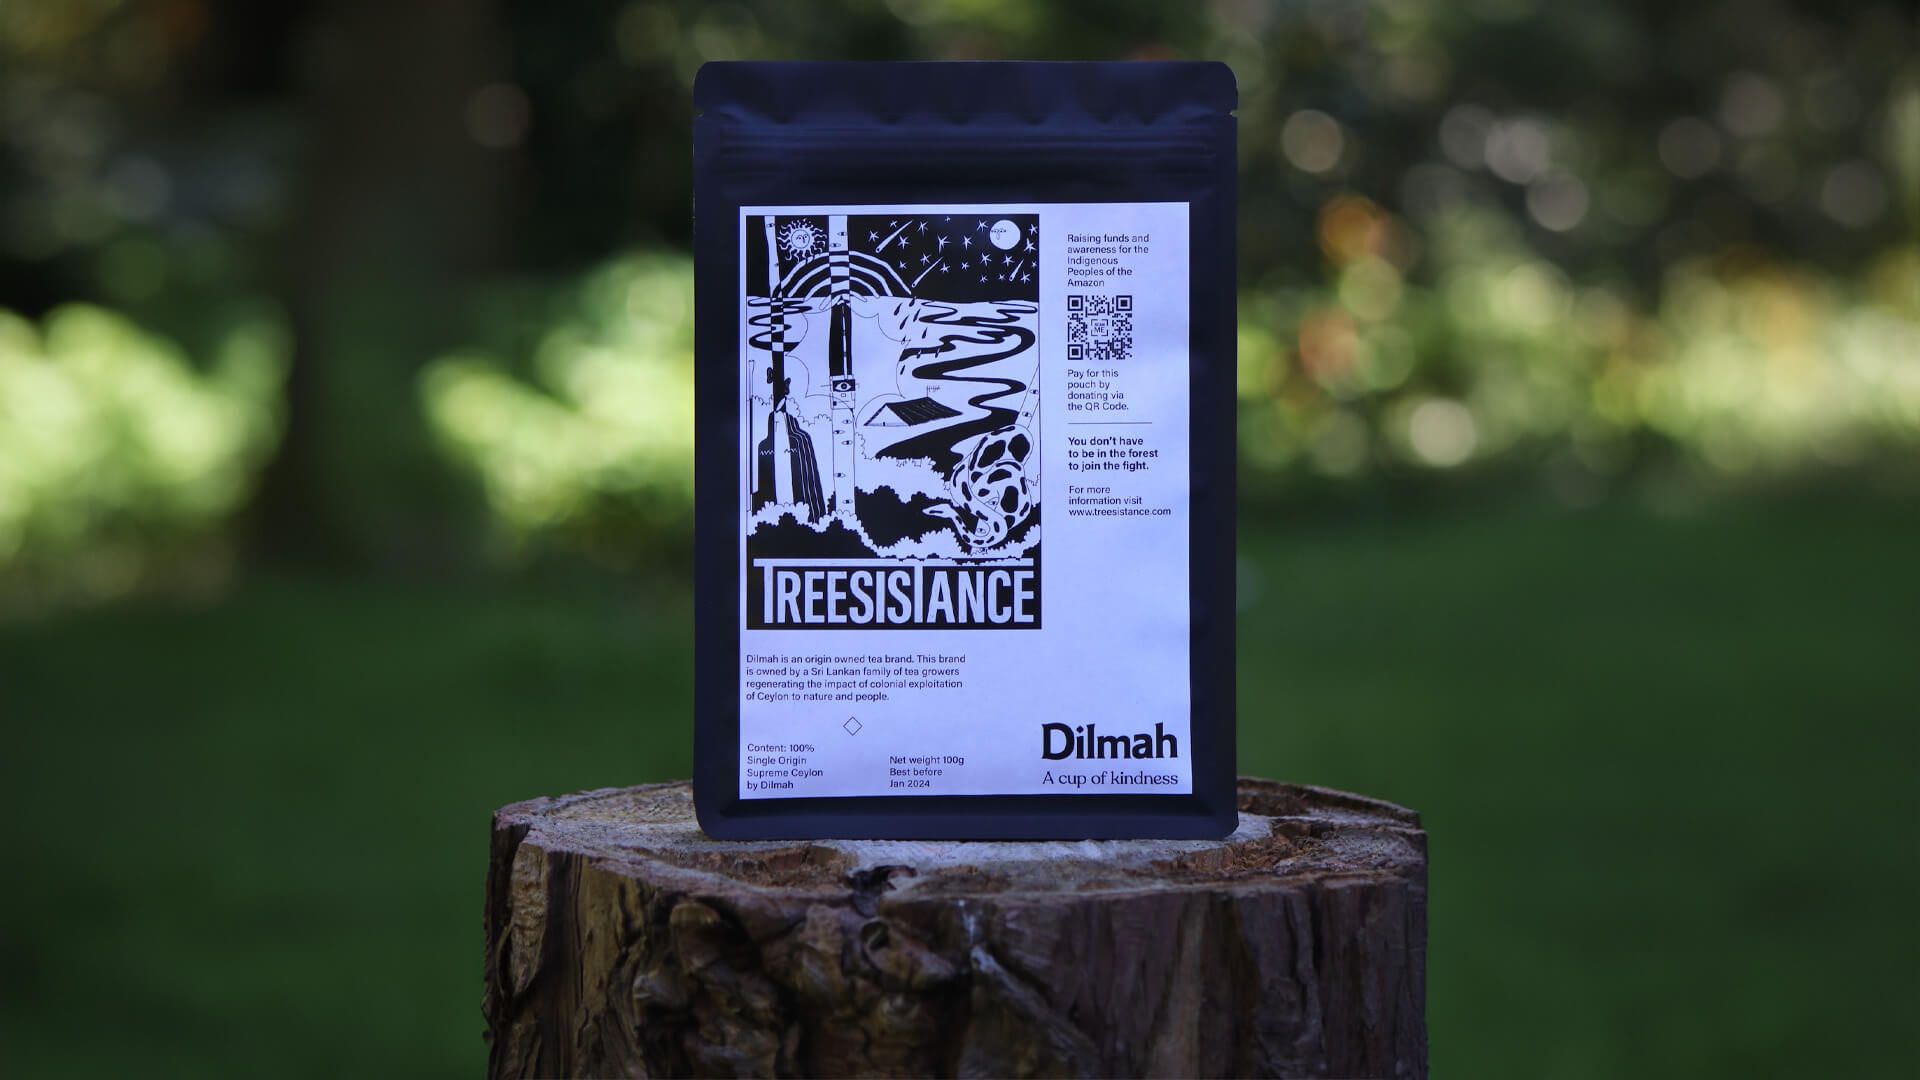 Dilmah Tea x Treesistance Collaboration